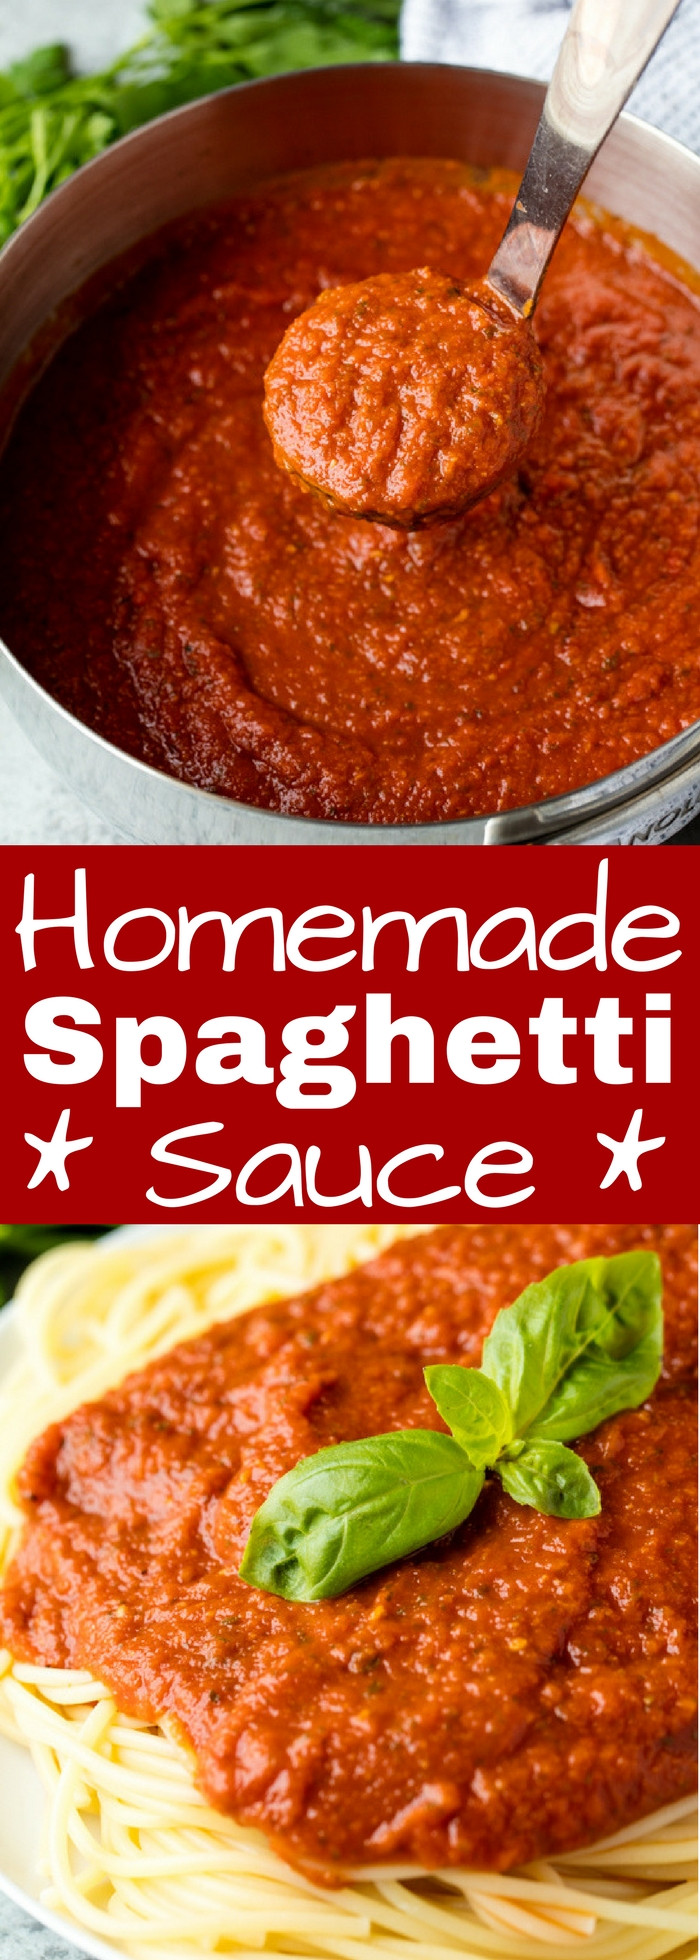 Homemade Spaghetti Sauce Recipe
 Homemade Spaghetti Sauce